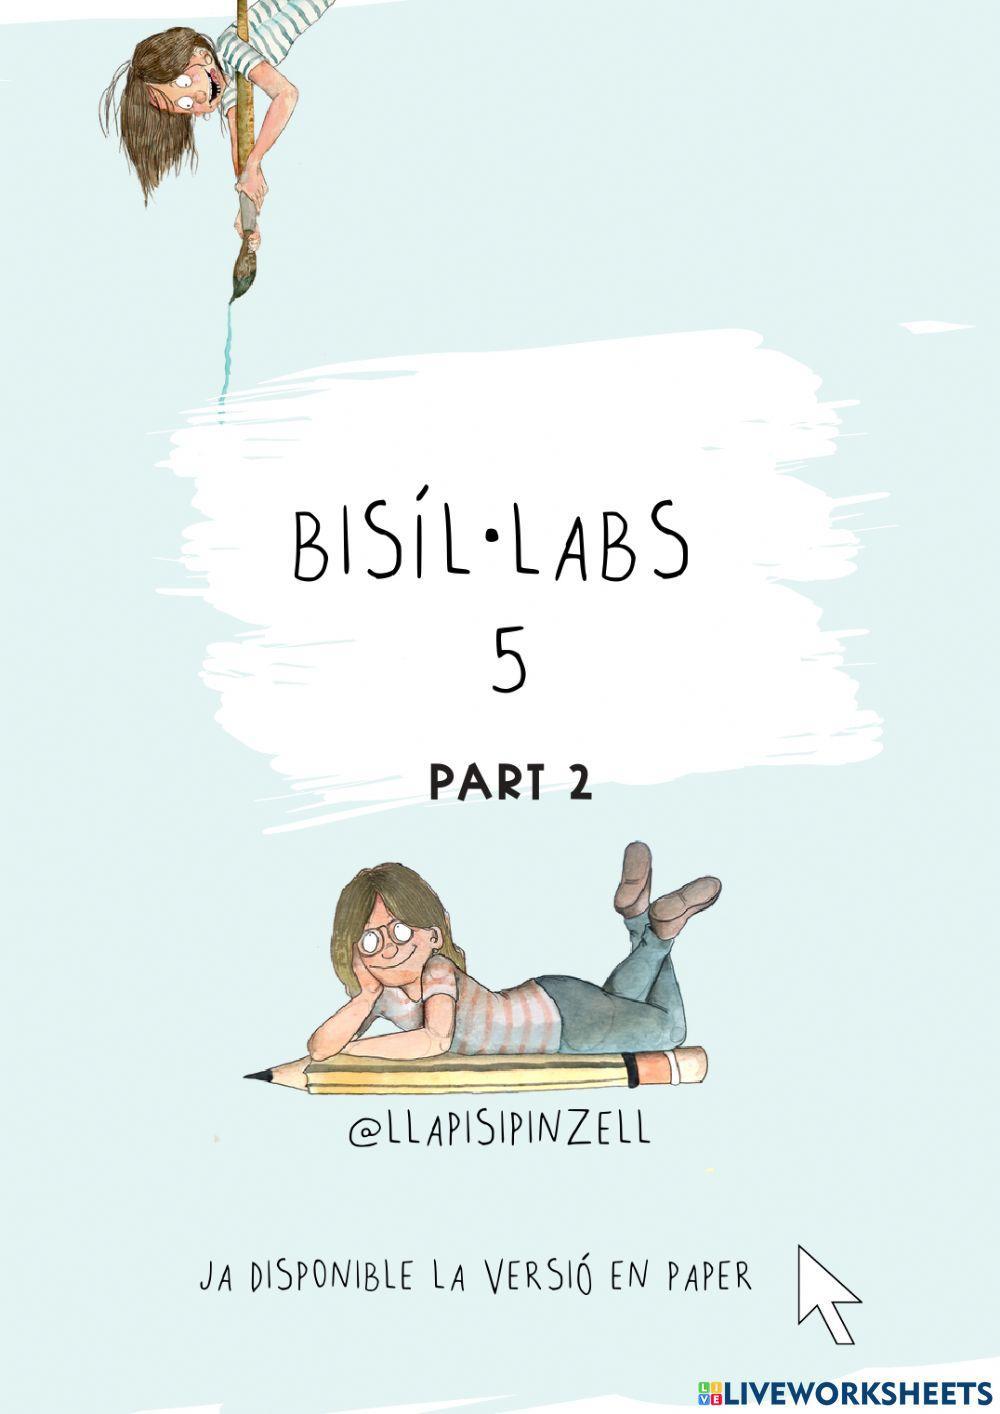 Bisíl·labs 5 part 2